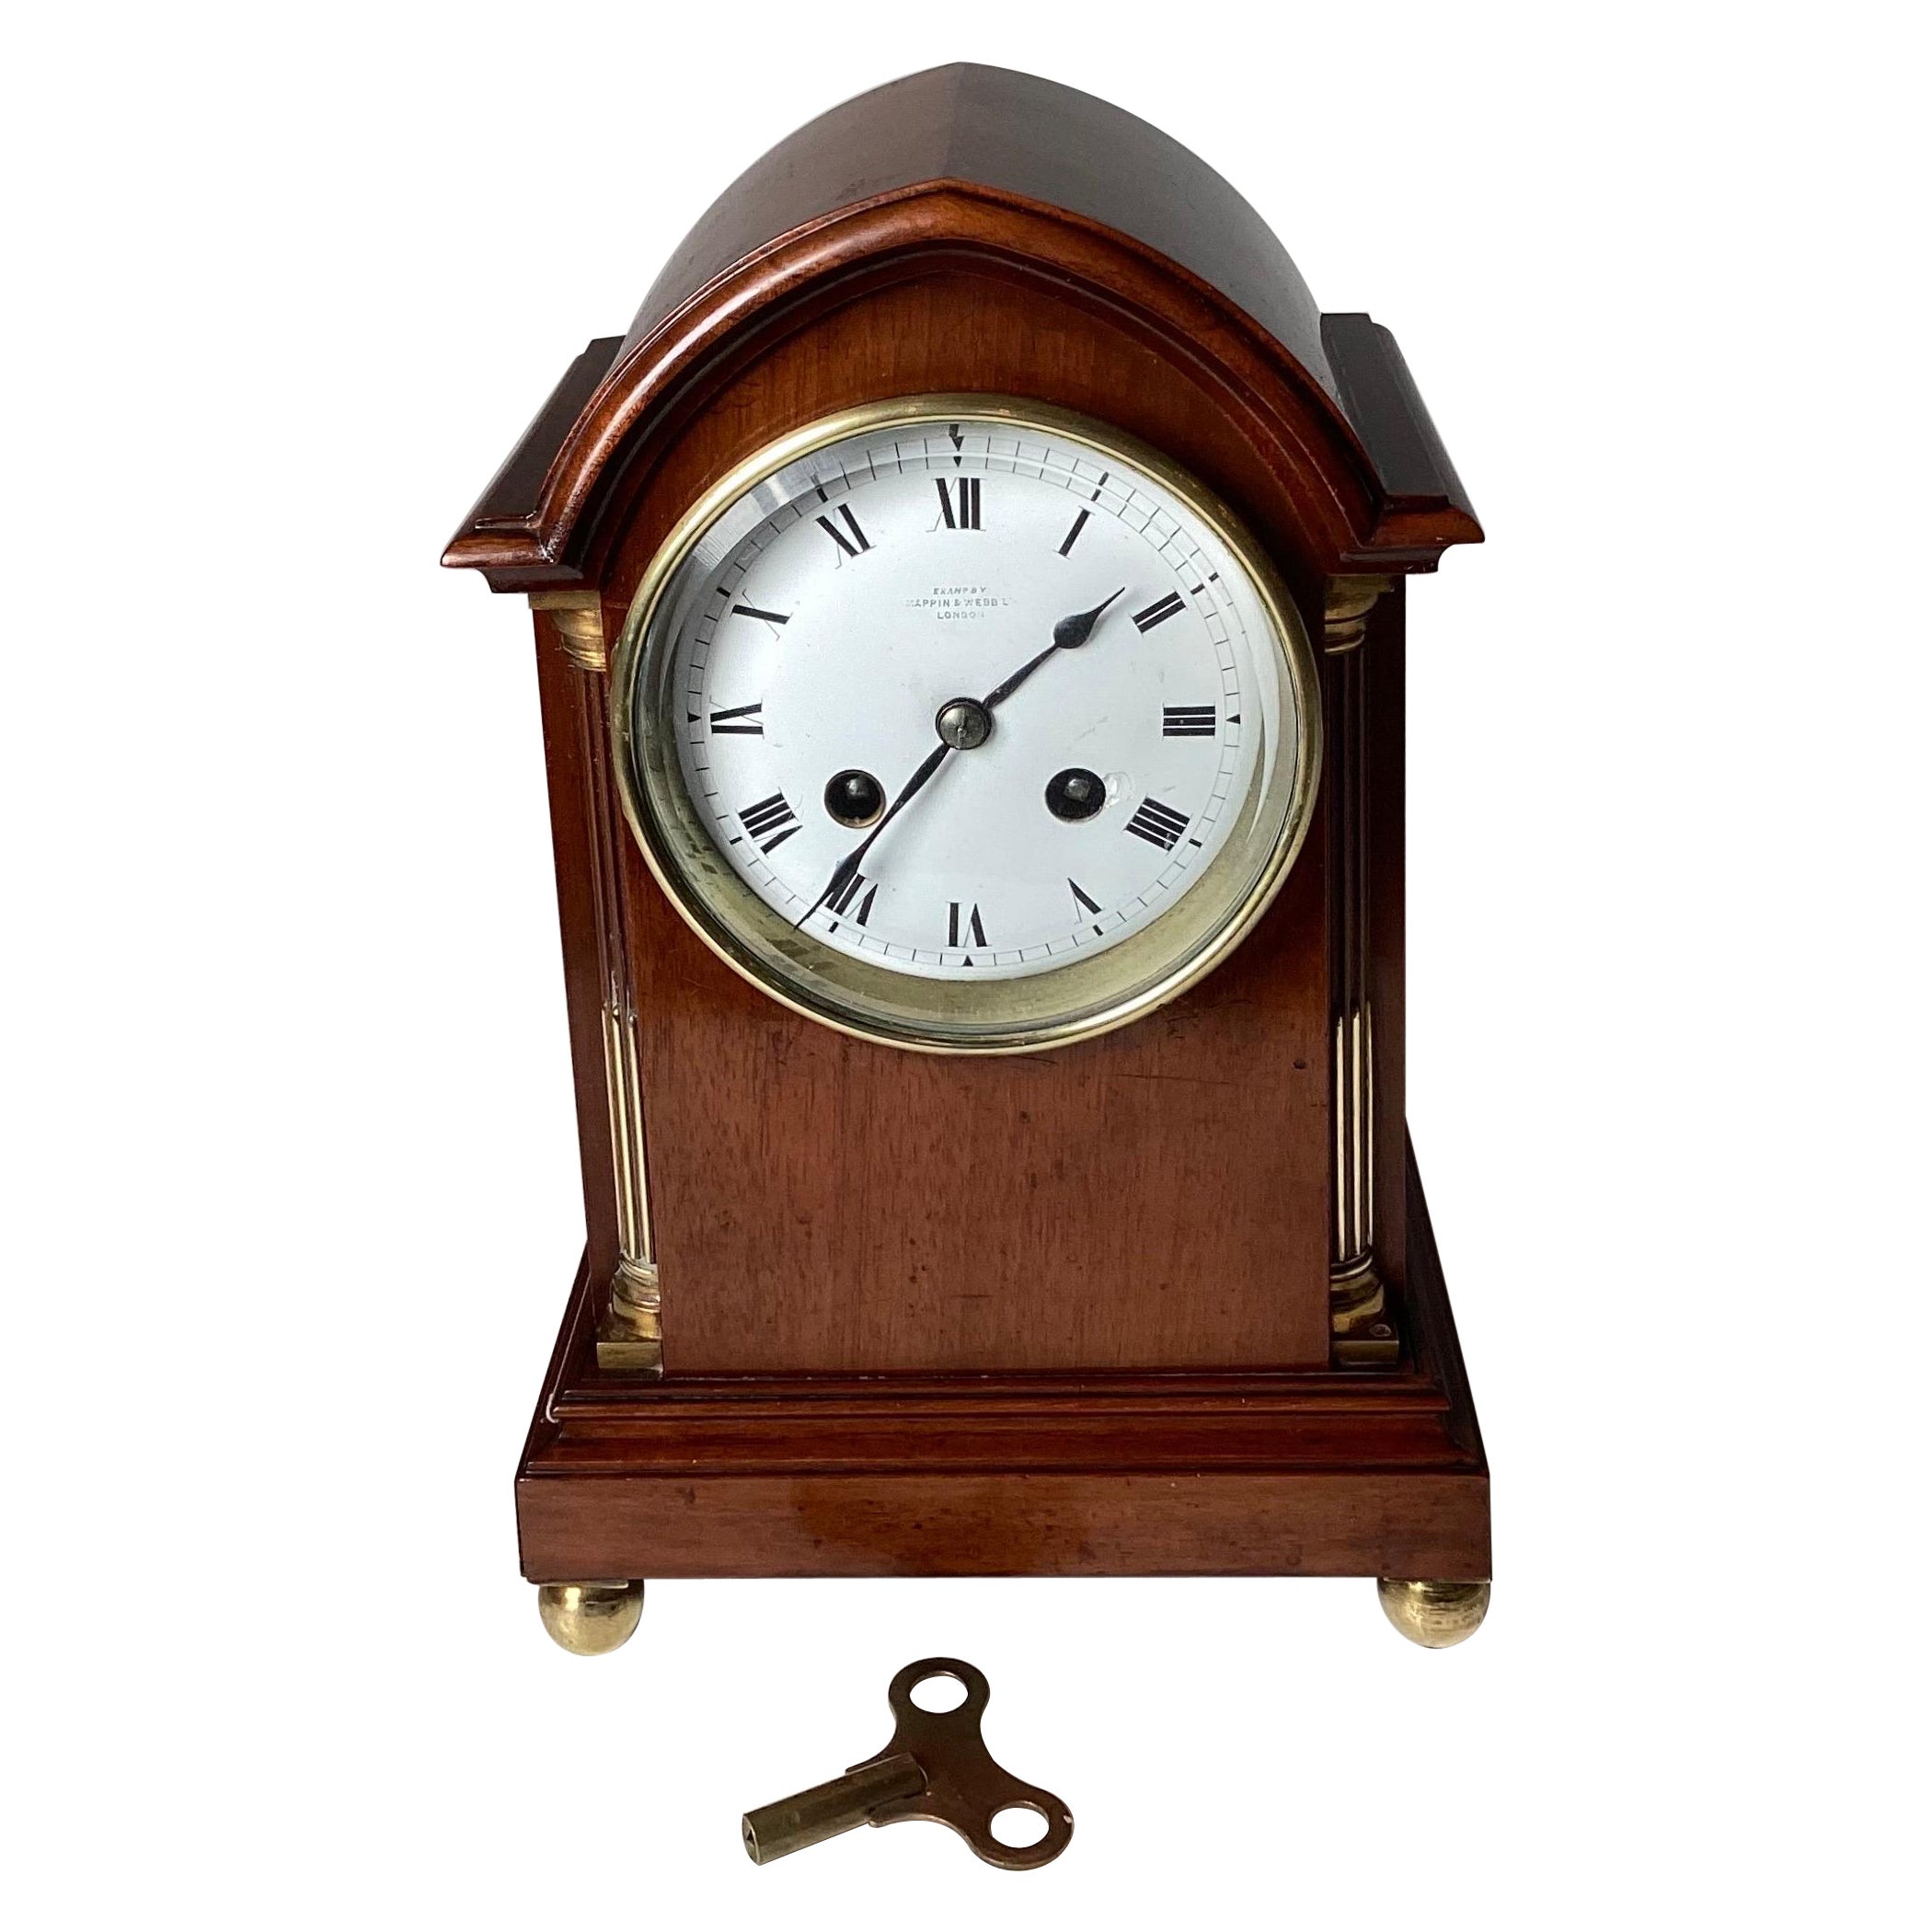 Pequeño reloj de chimenea francés de caoba, vendido por Mappin & Webb, s. XIX.